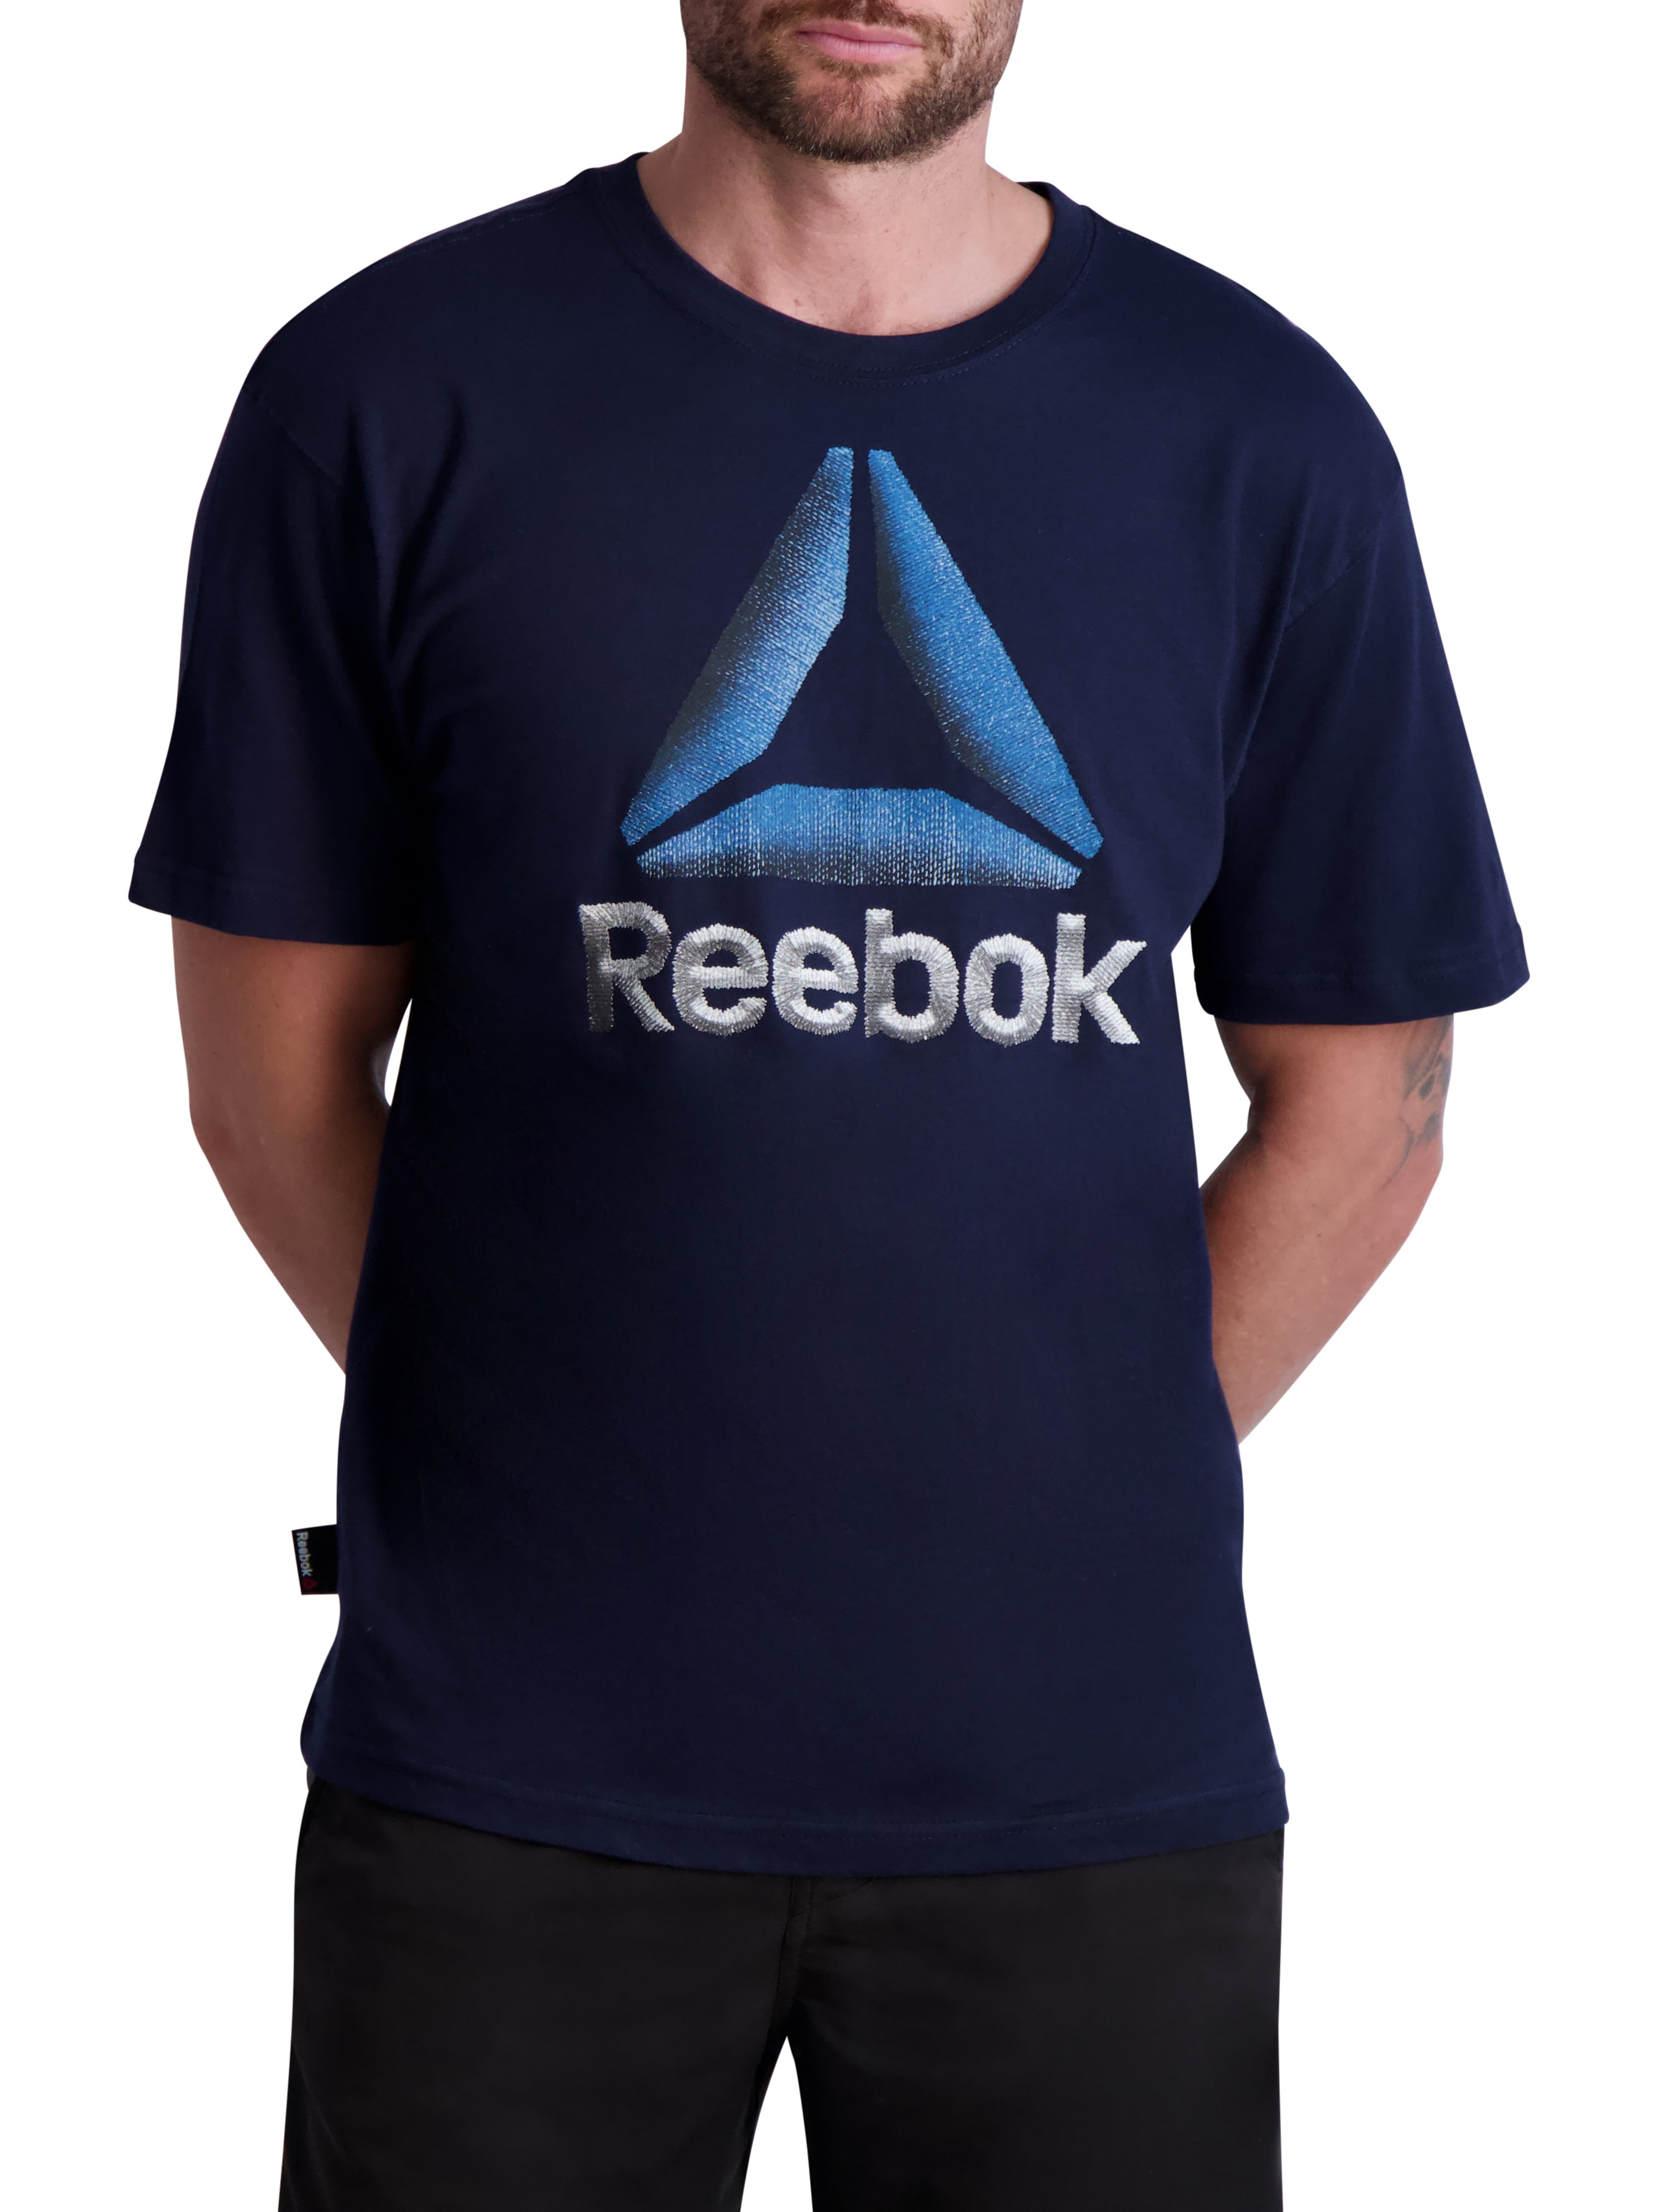 Reebok Men's Graphic Short Sleeve T-Shirt